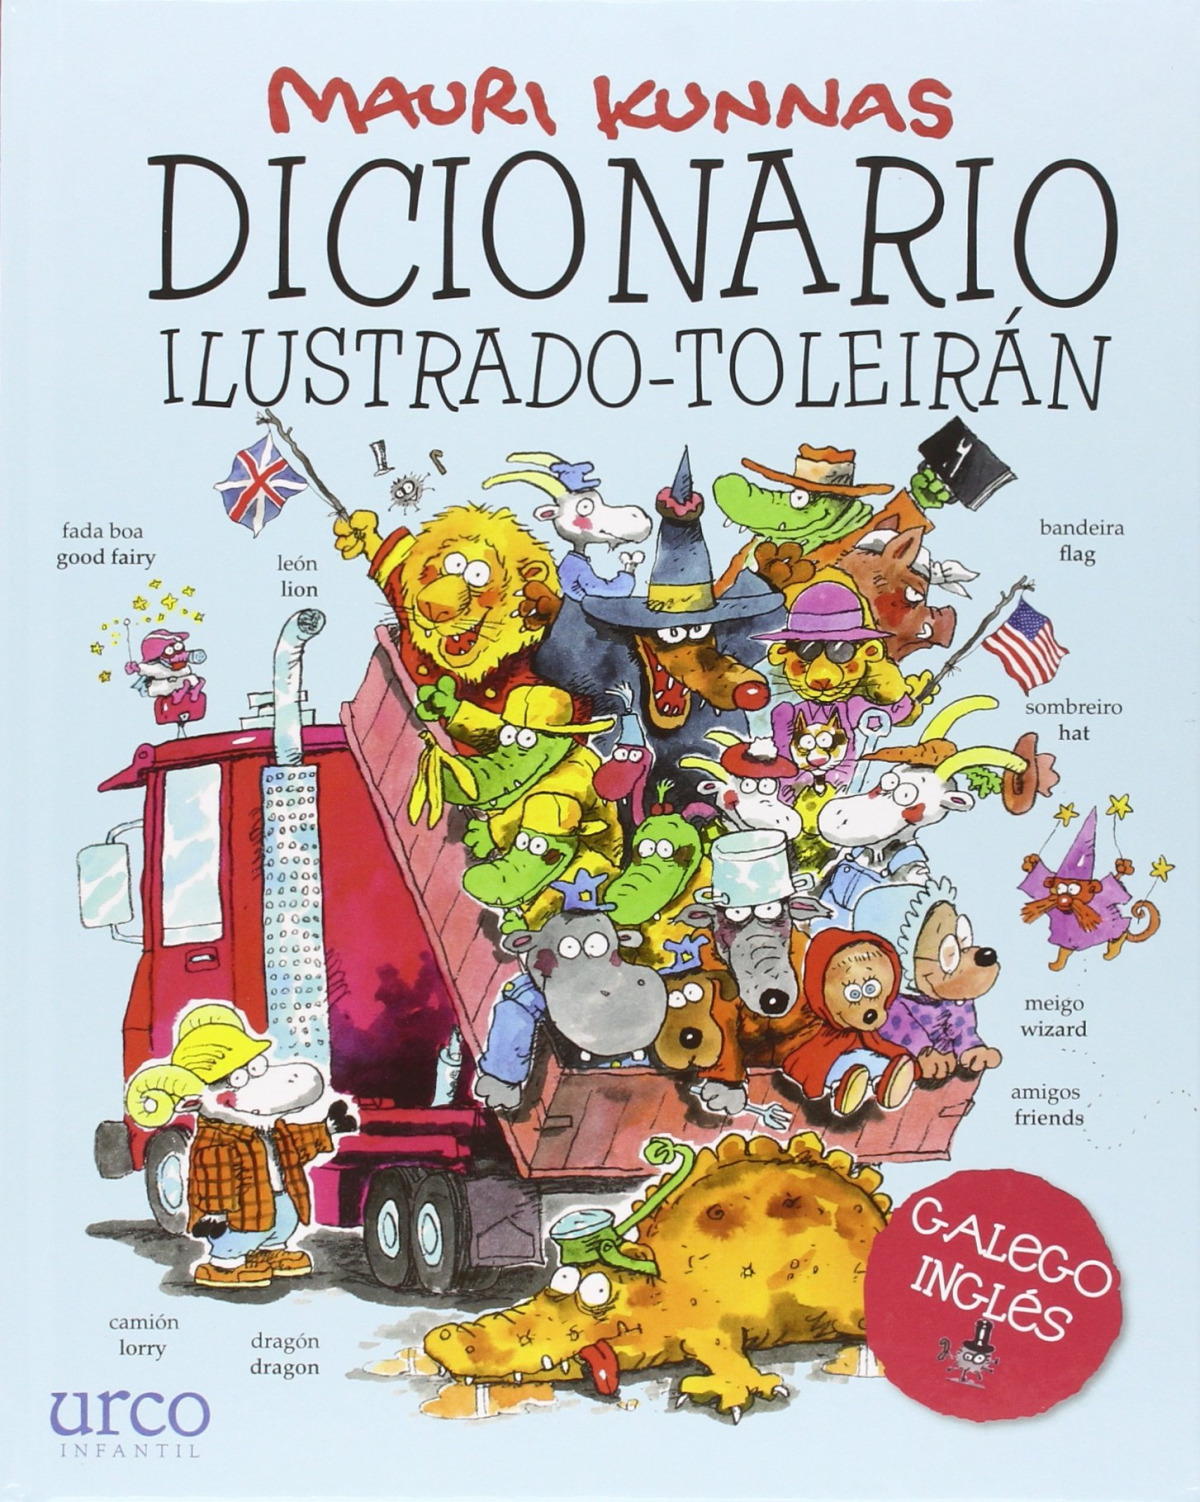 Diccionario ilustrado-toleiran - Kunnas, Mauri